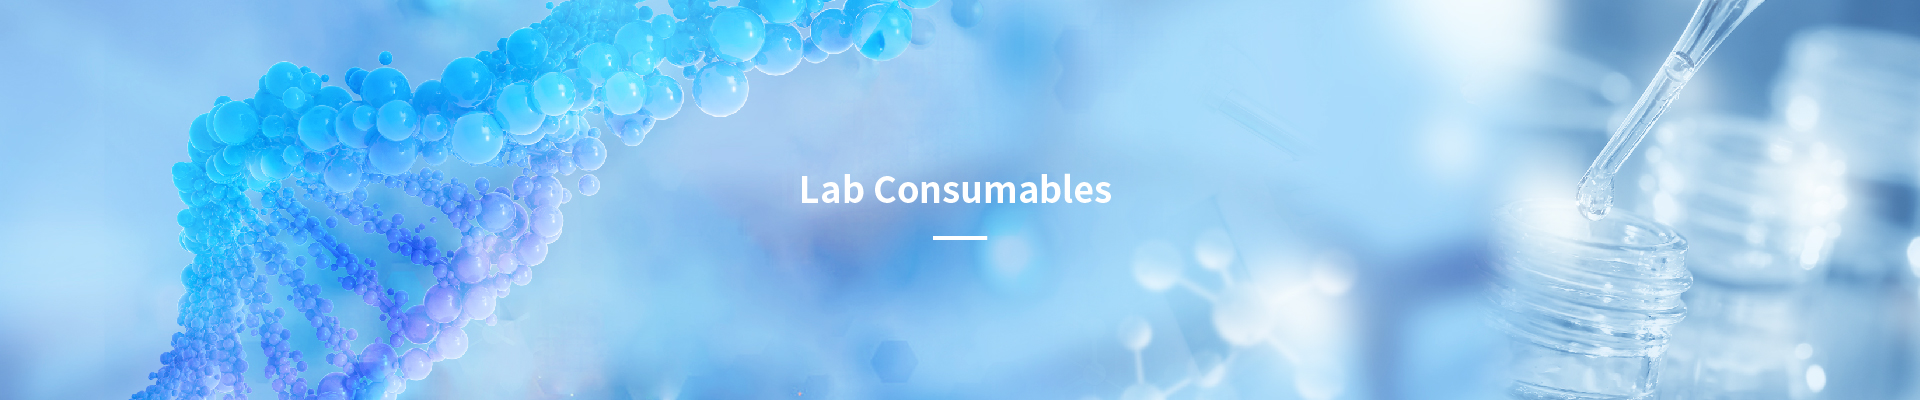 Laboratory Consumables - Freezer Racks